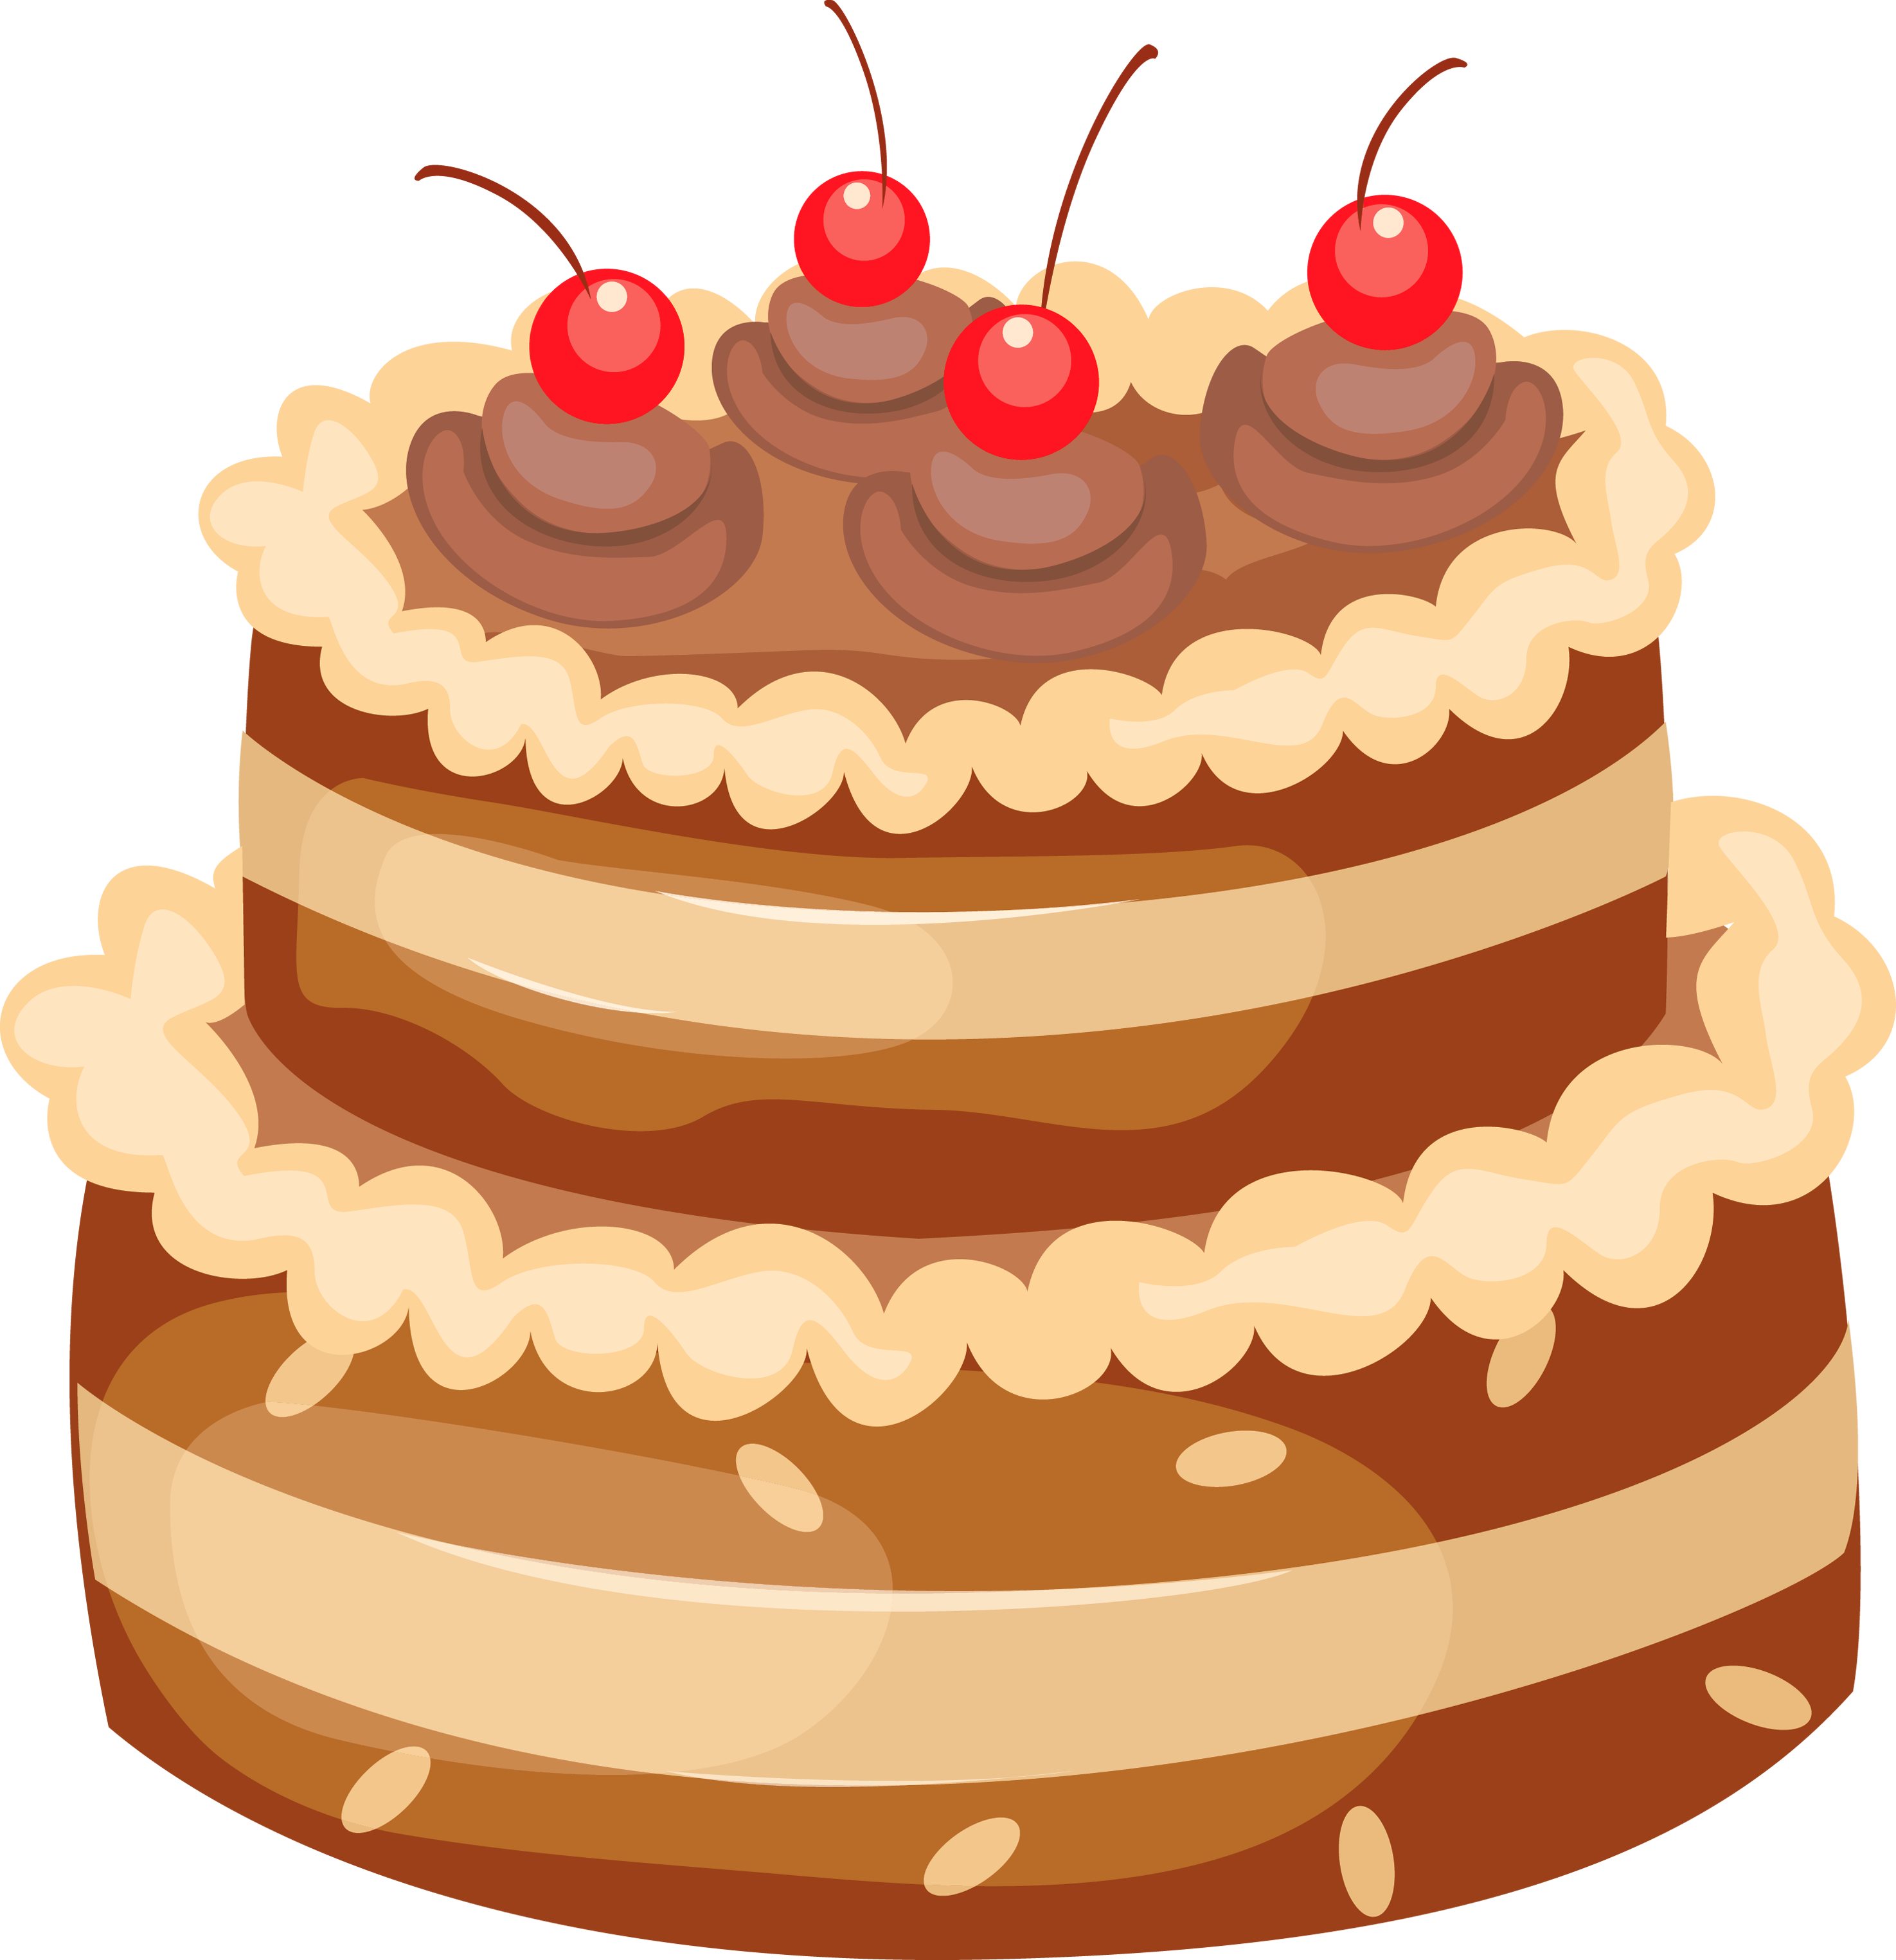 Pin Adorable Panda Cupcakes Cutestfoodcom Cake on Pinterest